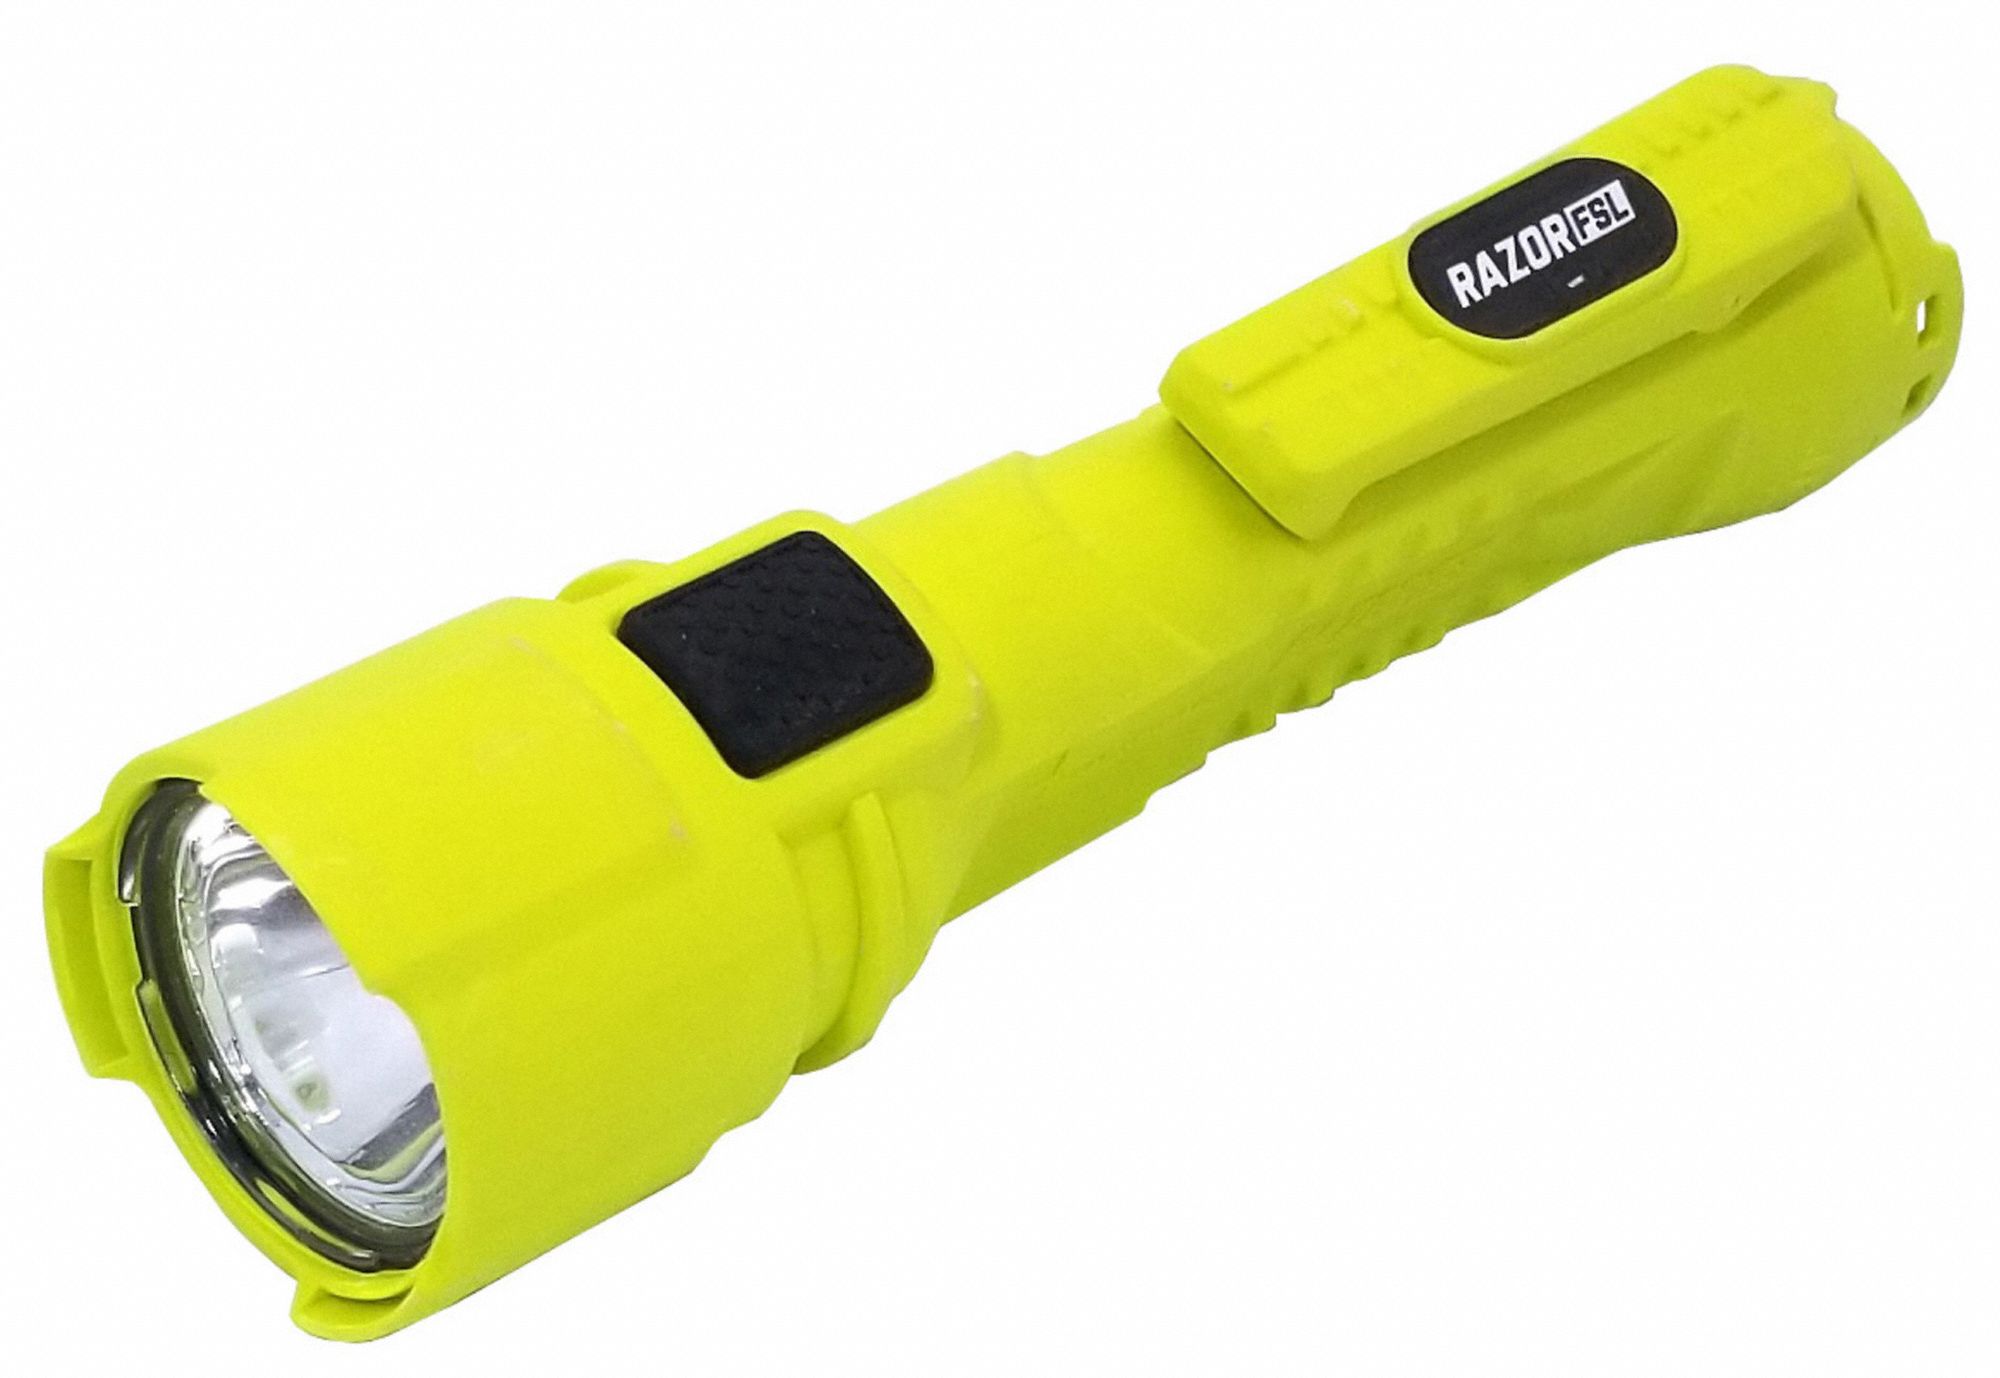 Safety-Rated Flashlight: 325 lm Max. Brightness, 7 hr Run Time at Max. Brightness